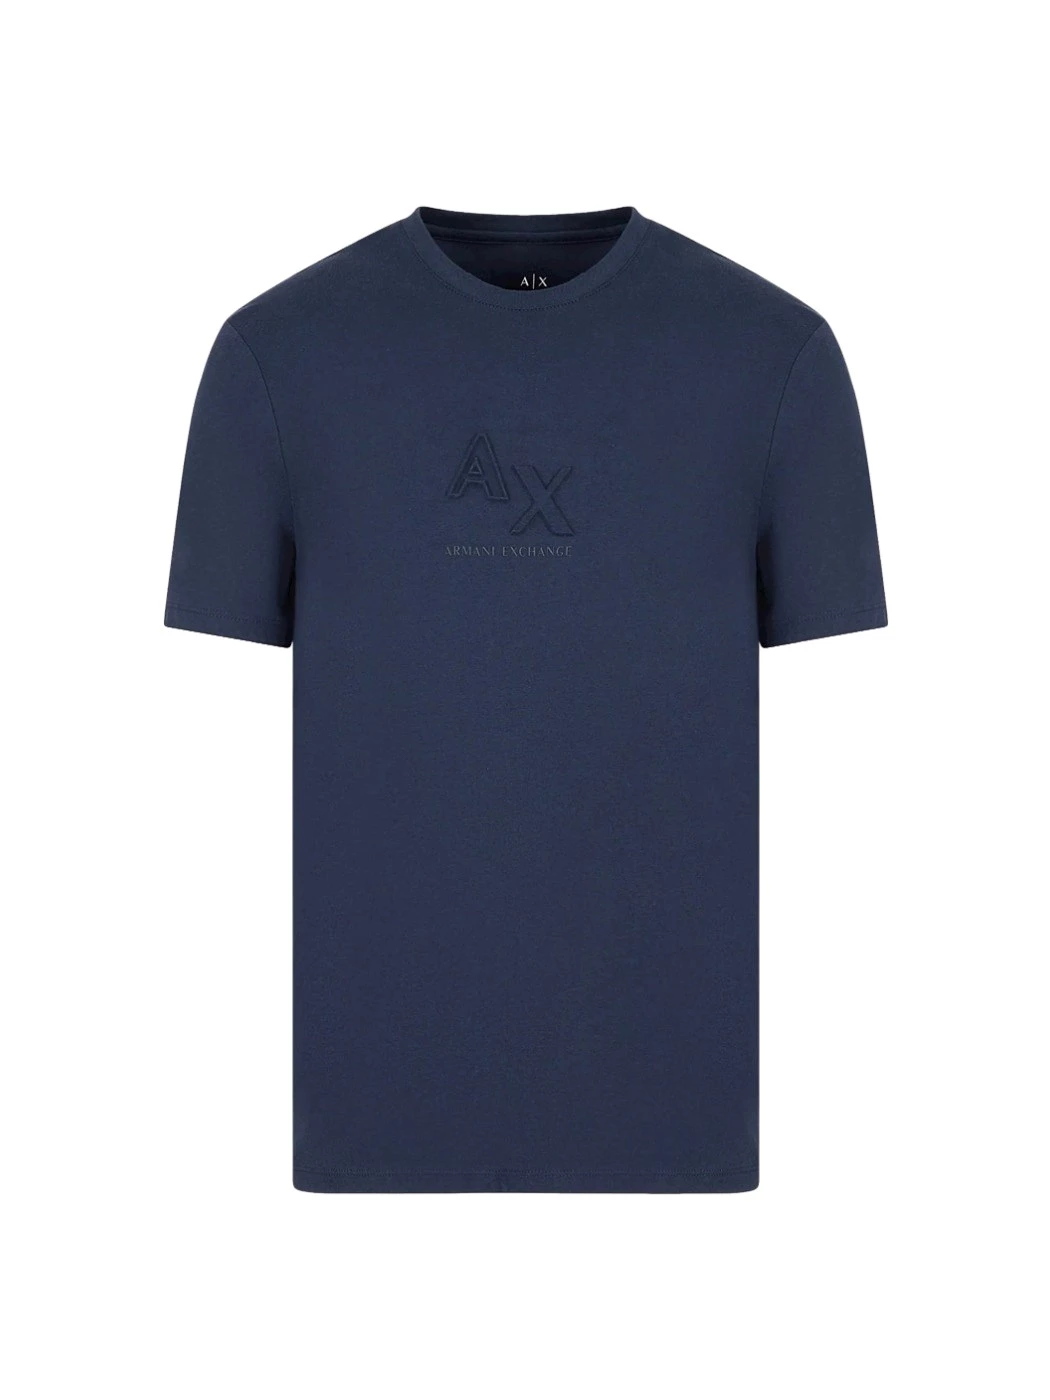 Armani Exchange regular fit cotton T-shirt